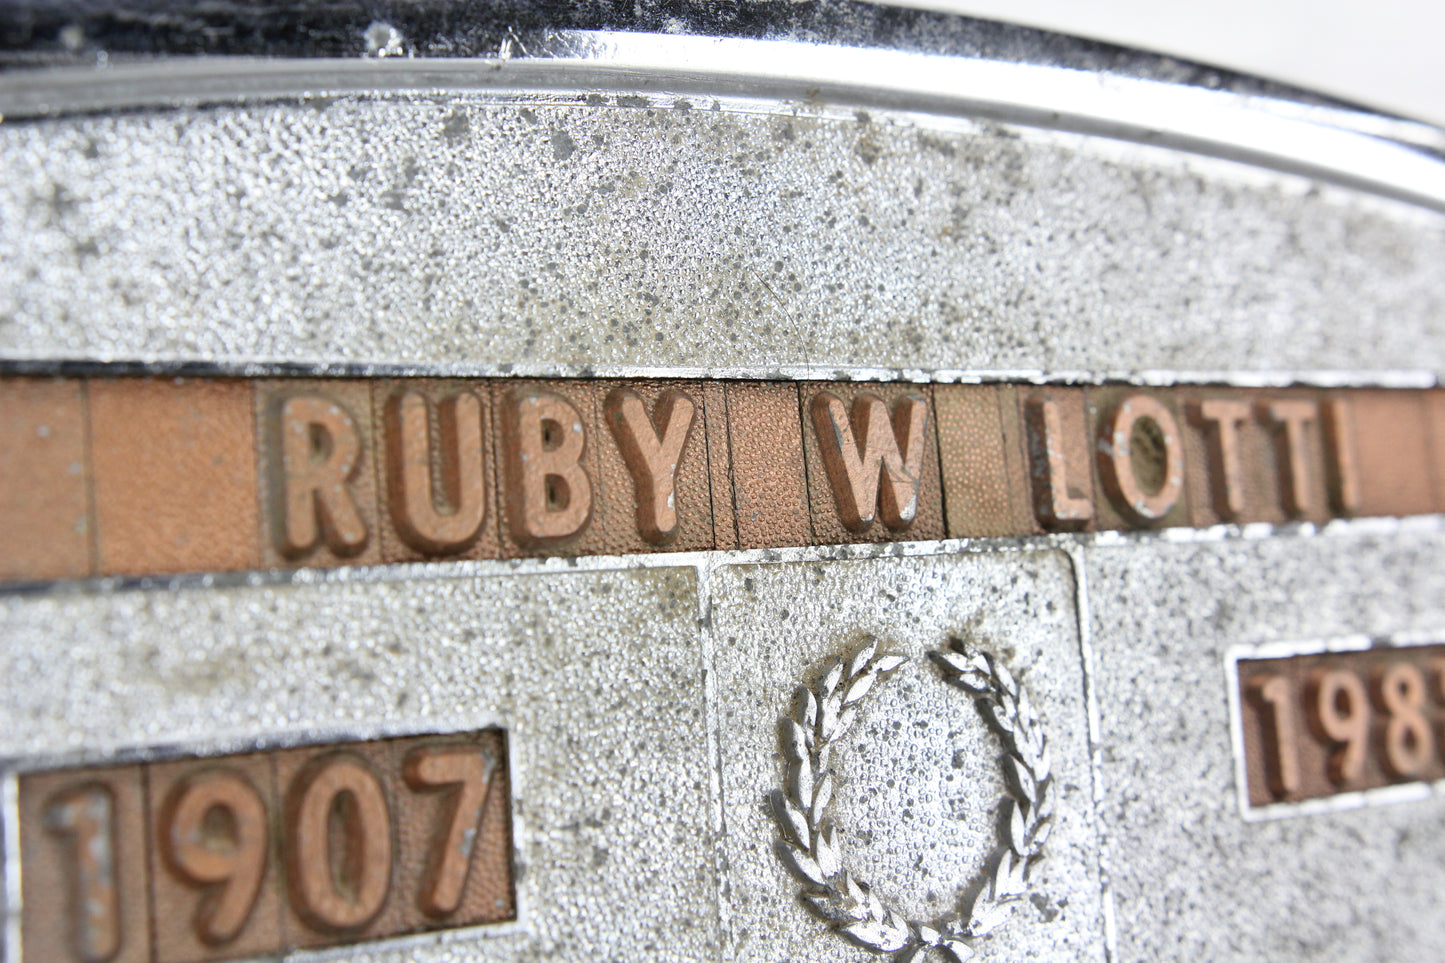 Ruby L. Lotti, 1907-1988, Funeral Temporary Grave Marker